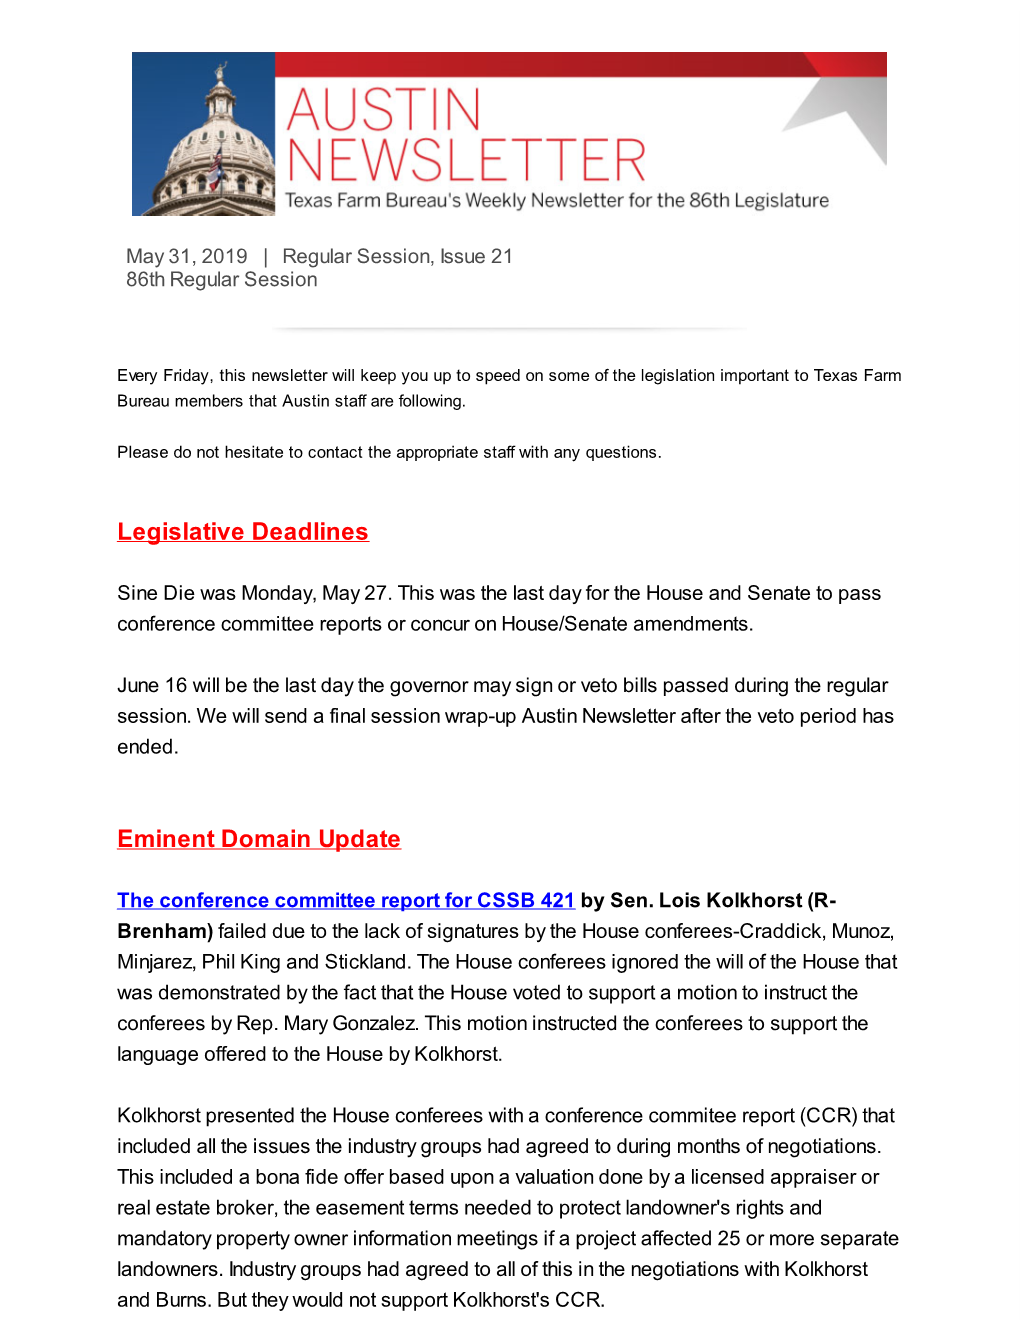 Legislative Deadlines Eminent Domain Update